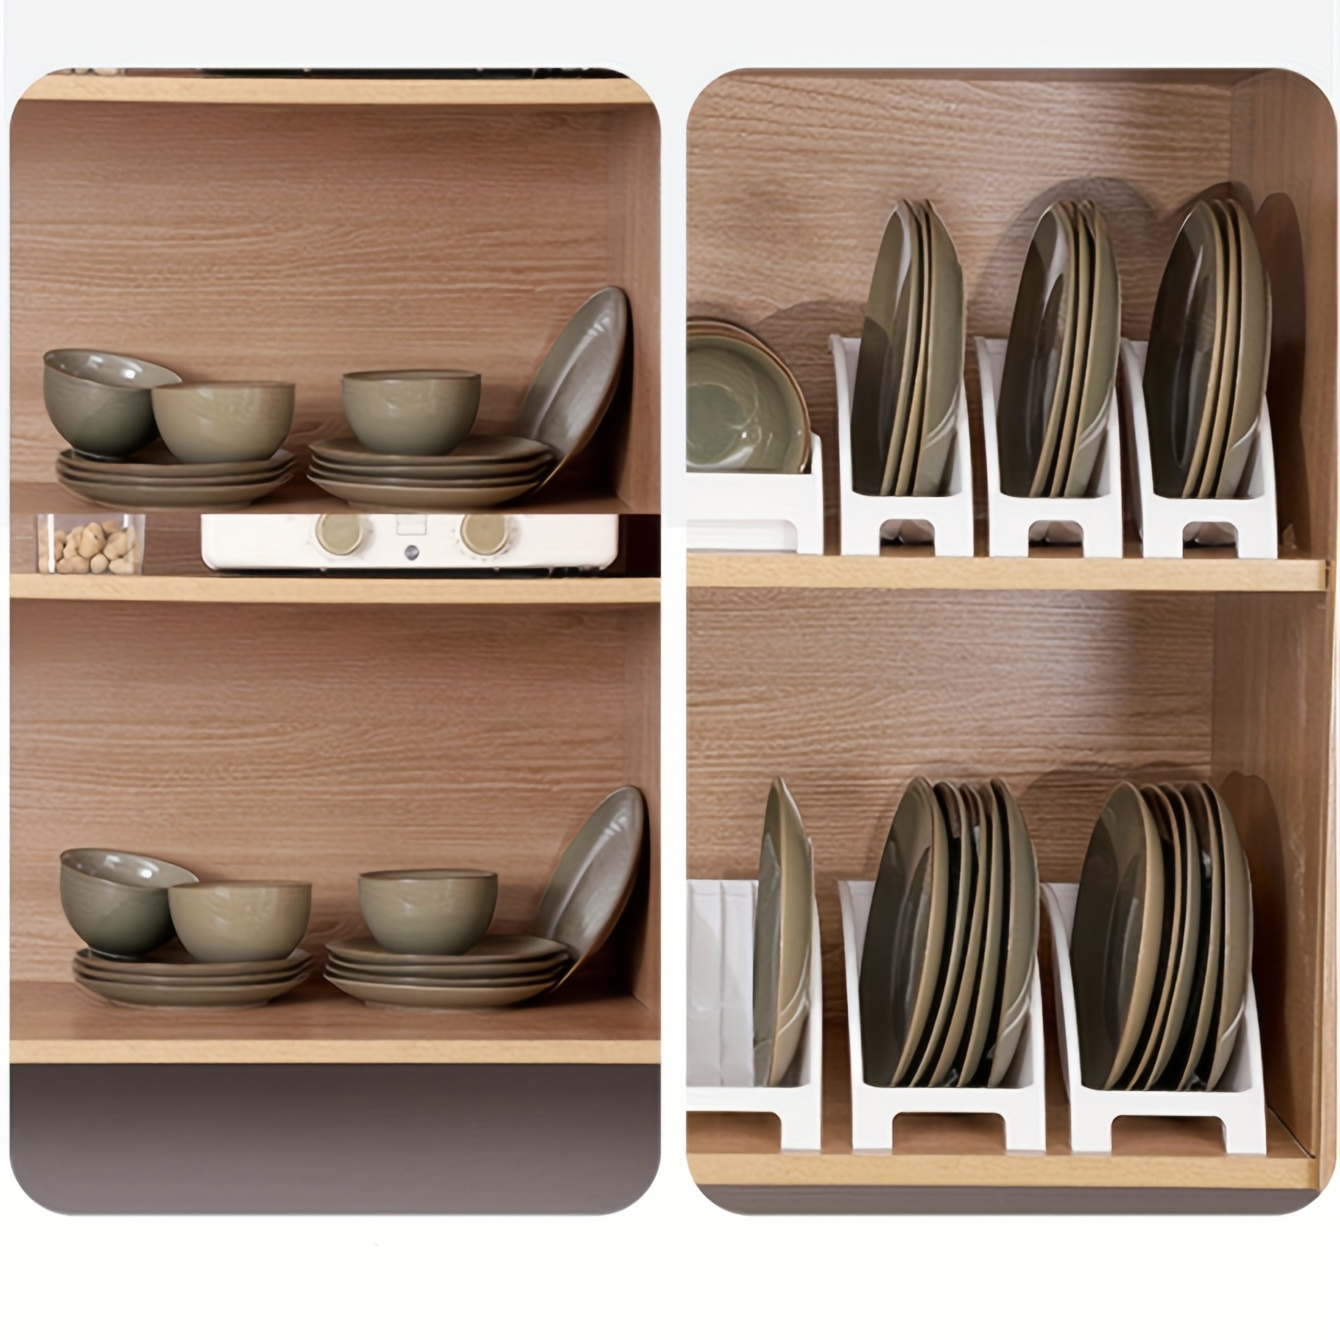 

3pcs Japanese Style Kitchen Storage Rack Set - White Plastic Space-saving Organizer For Bowls, Plates, Dishes & Chopsticks, Counter & Cabinet-friendly Design, For Cafes, Restaurants